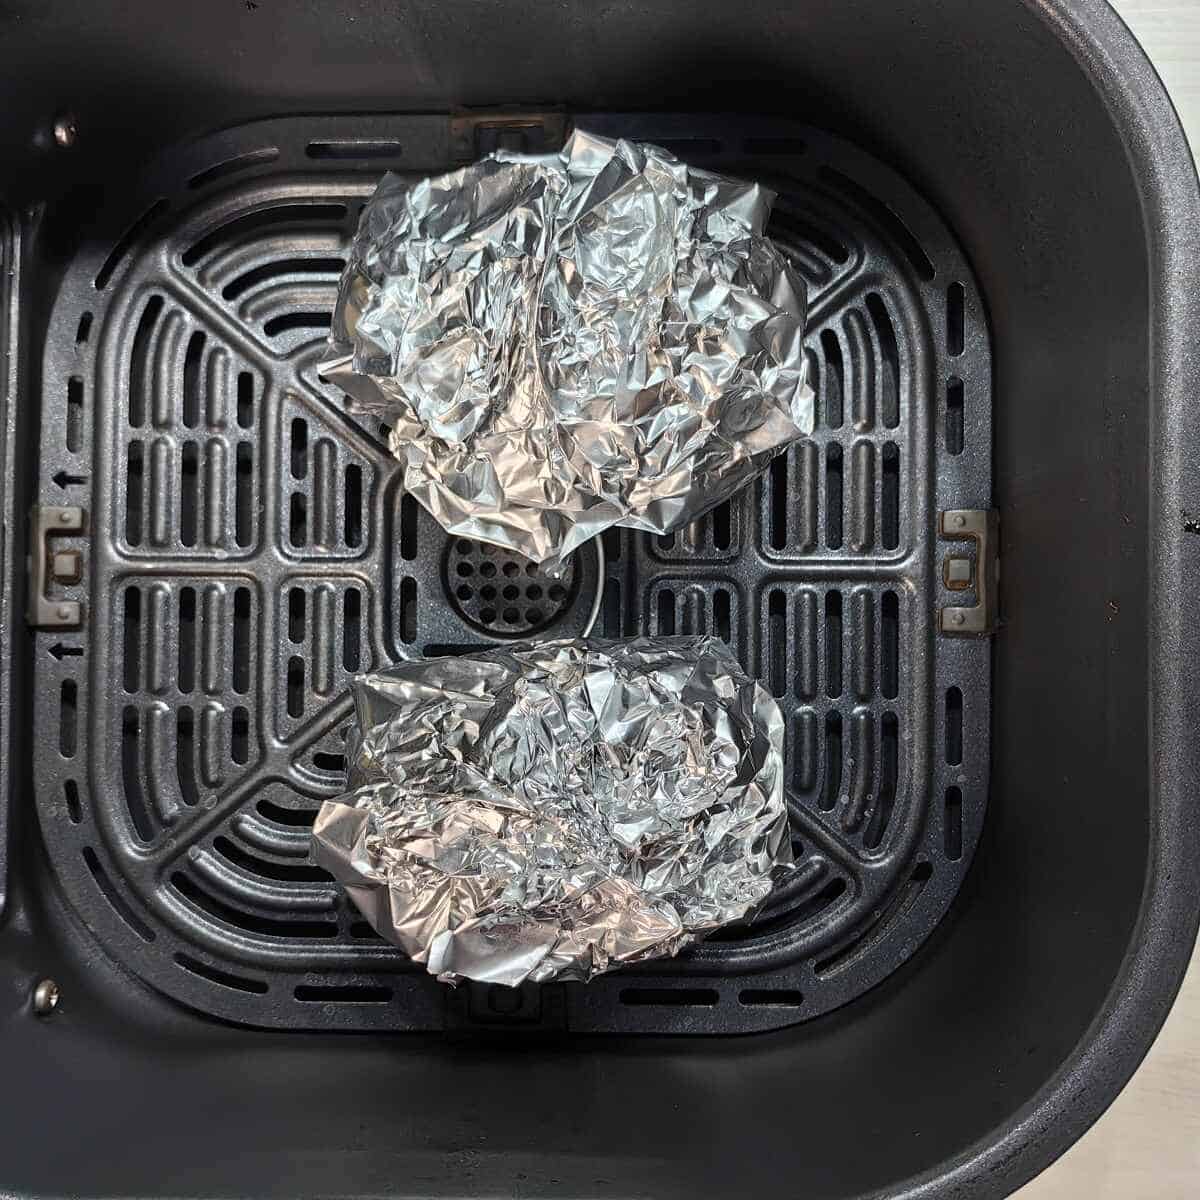 potatoes wrapped in foil inside air fryer basket